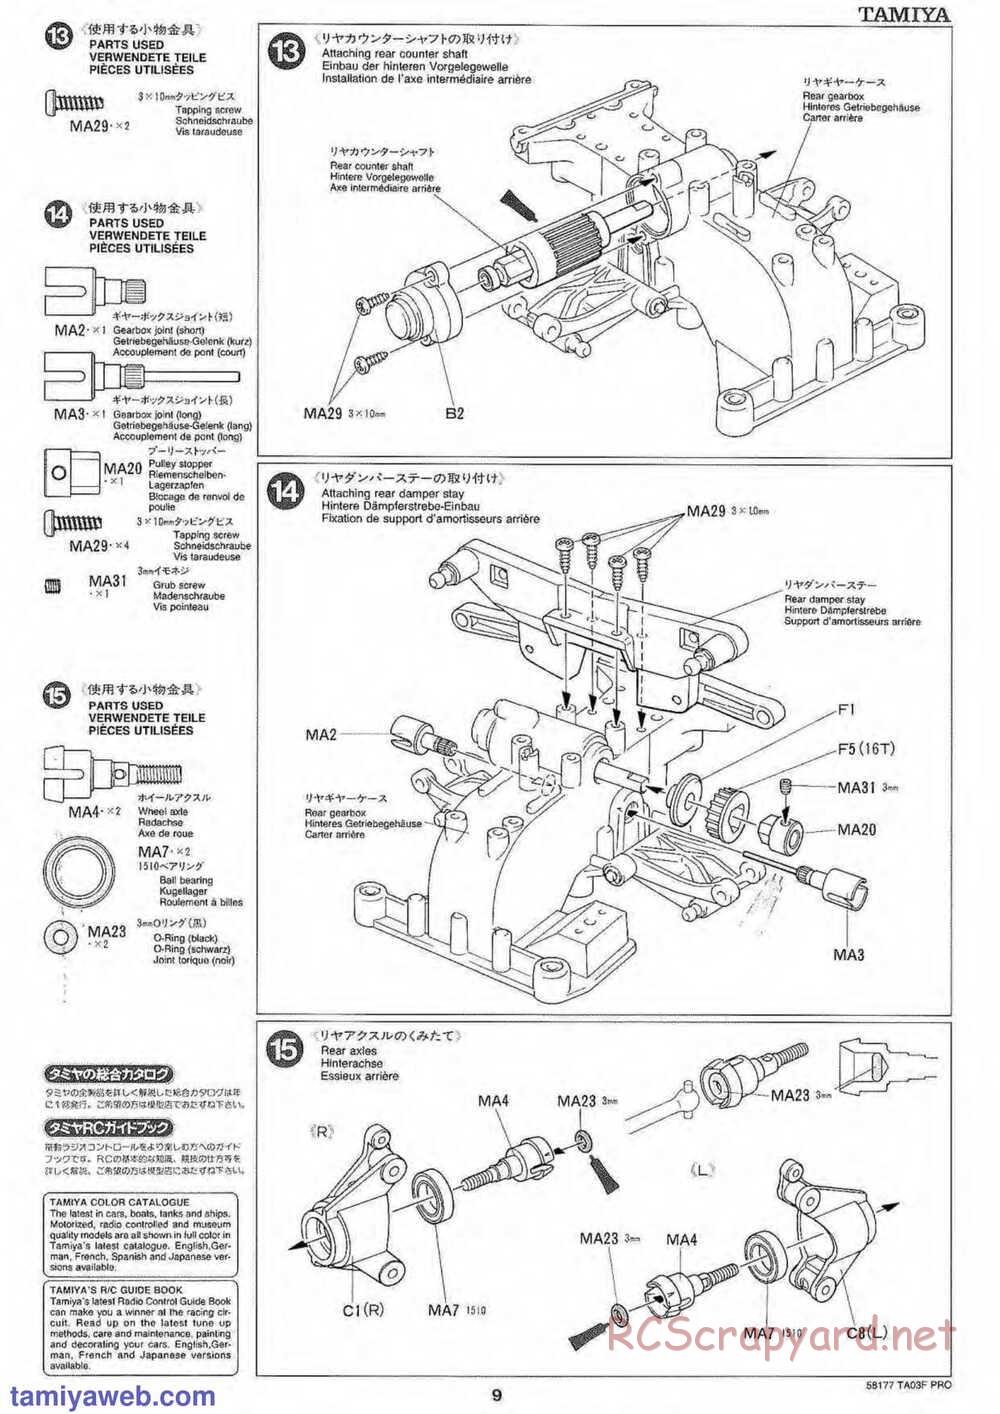 Tamiya - TA-03F Pro Chassis - Manual - Page 9